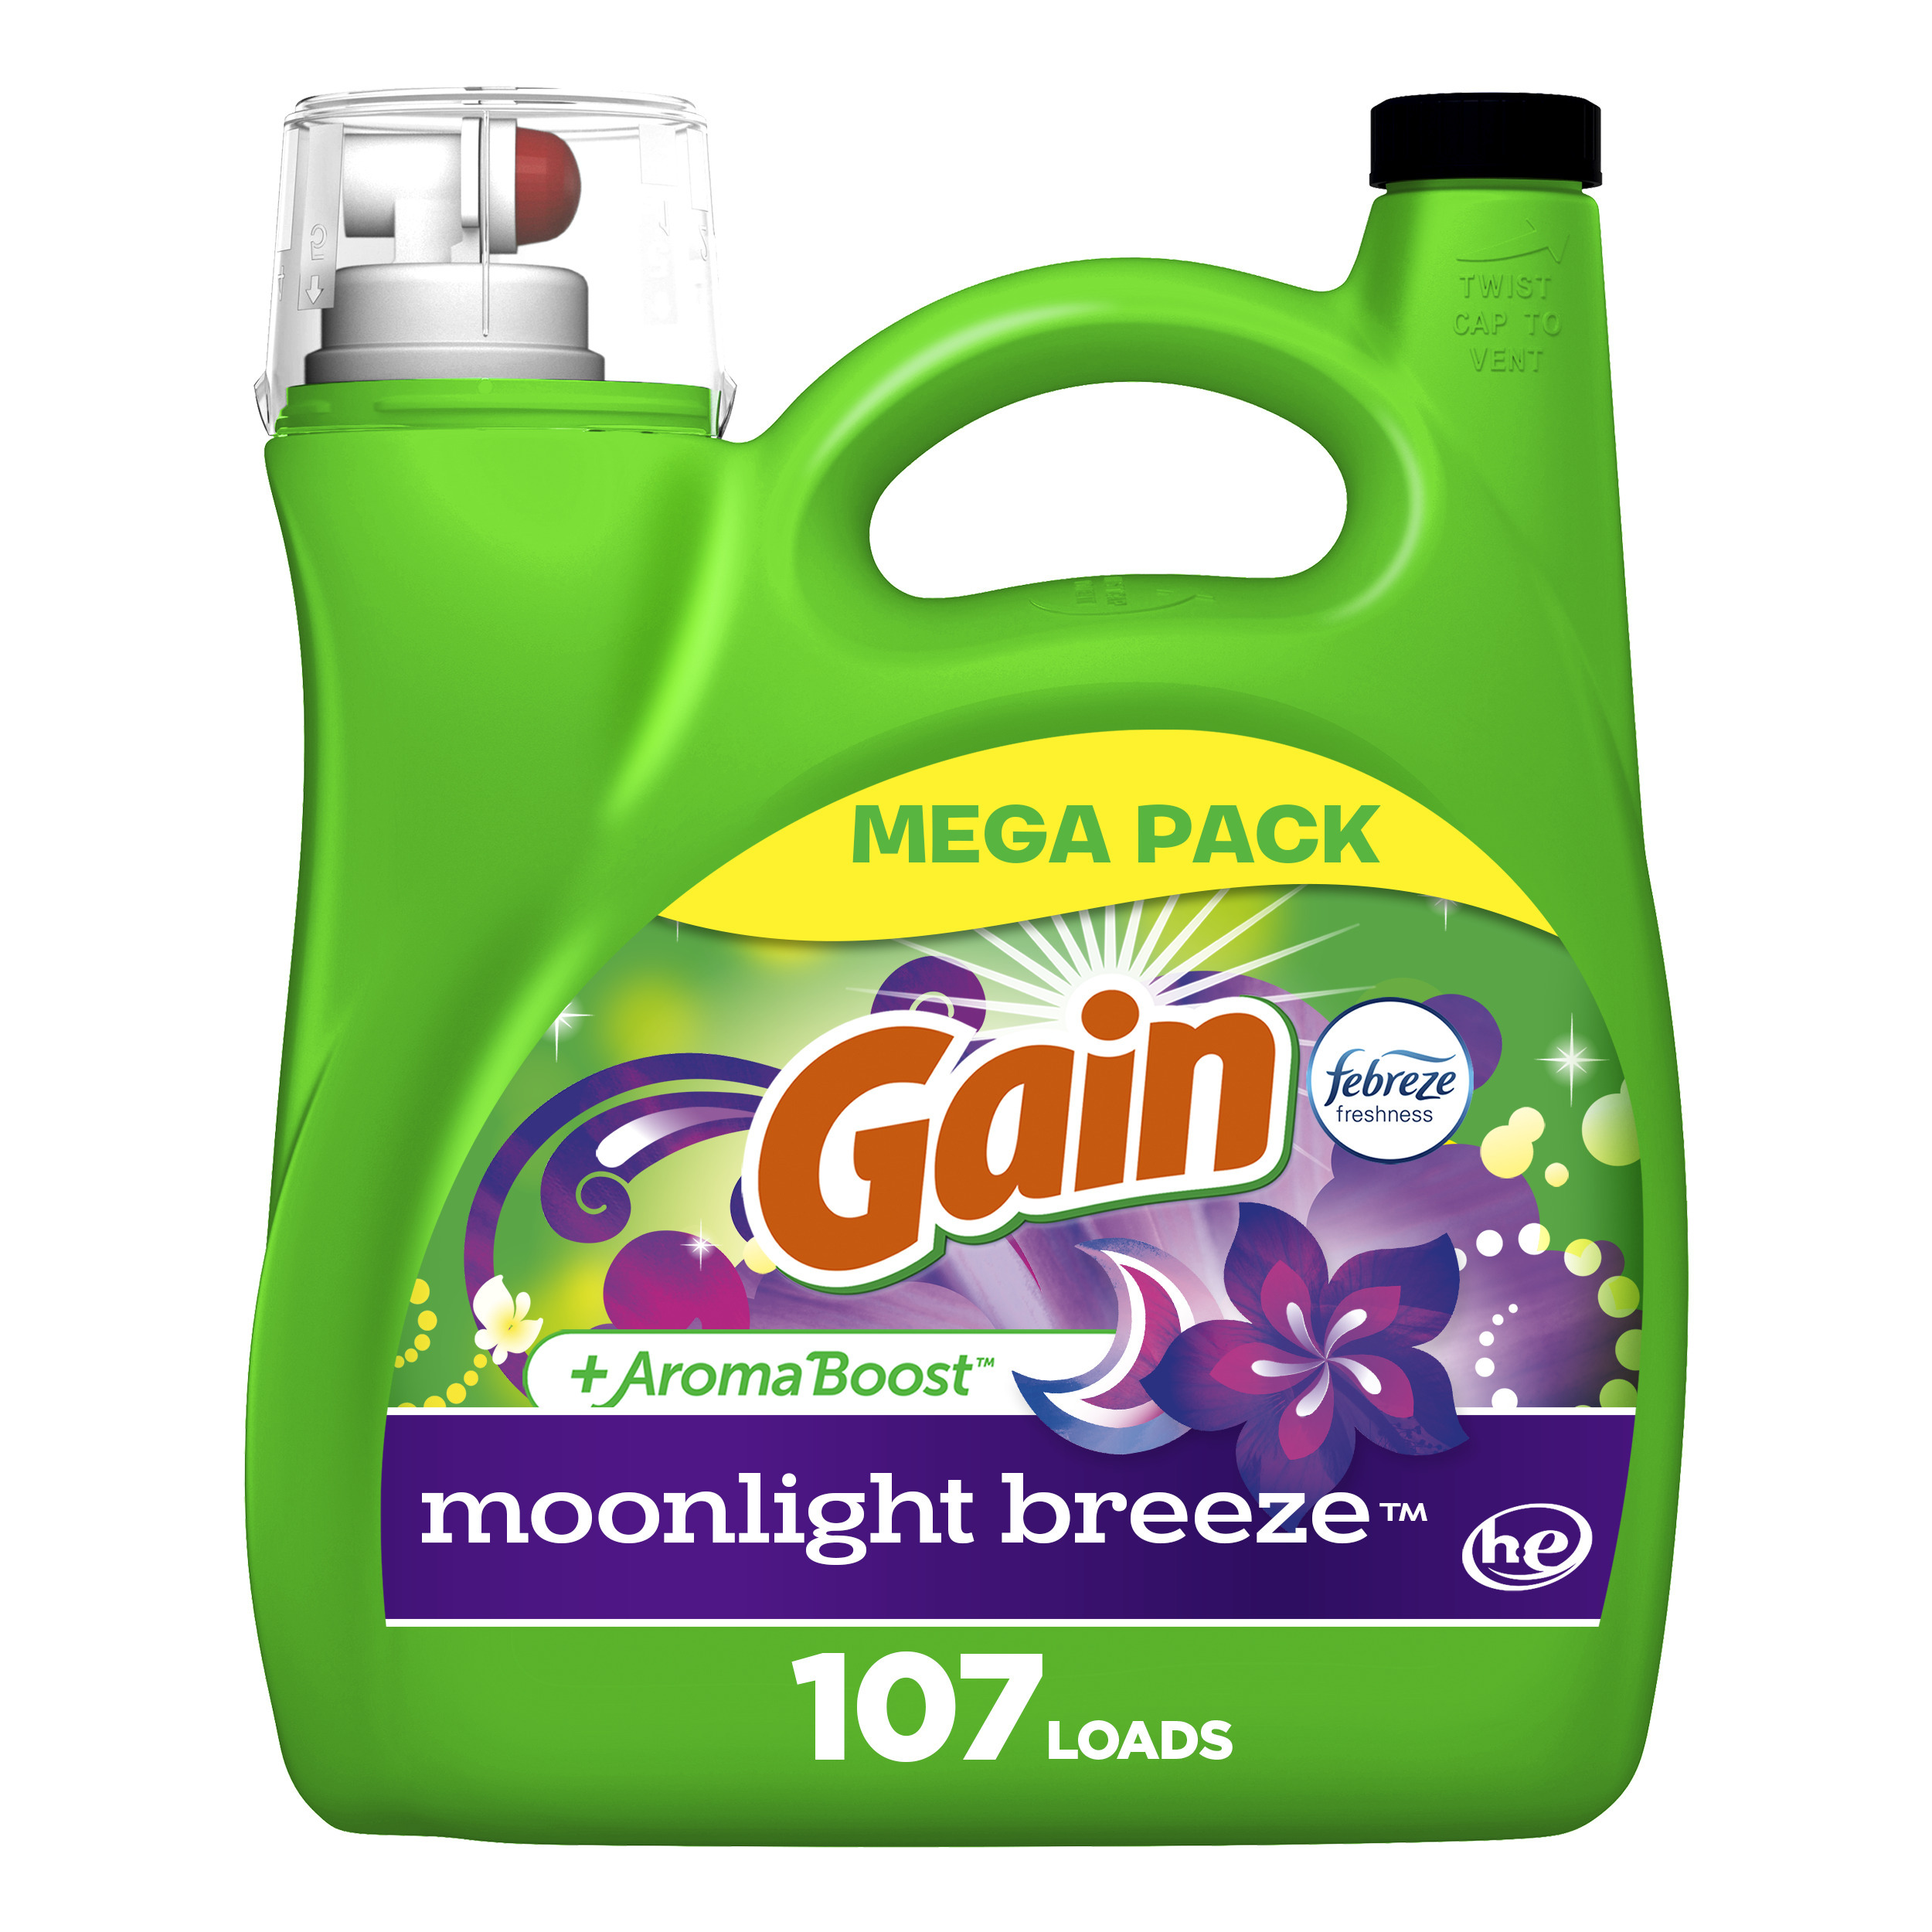 Gain + Aroma Boost Liquid Laundry Detergent, Moonlight Breeze Scent, 107 Loads, 154 fl oz, HE Compatible - image 1 of 8